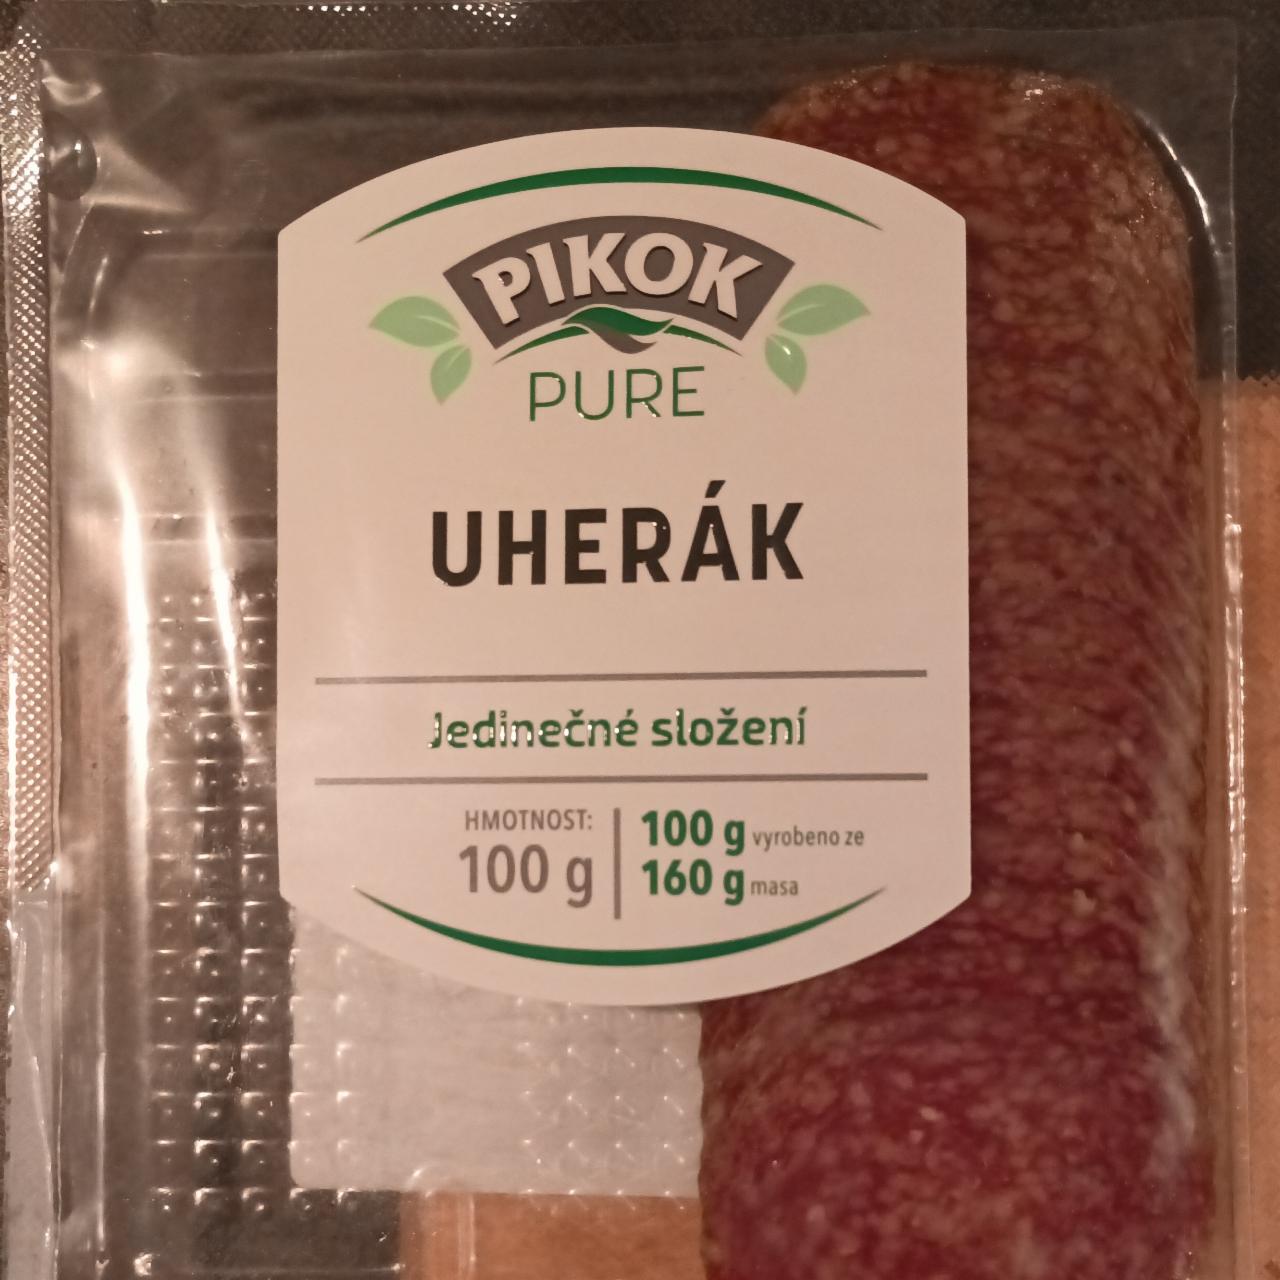 Fotografie - Uherák Pikok Pure